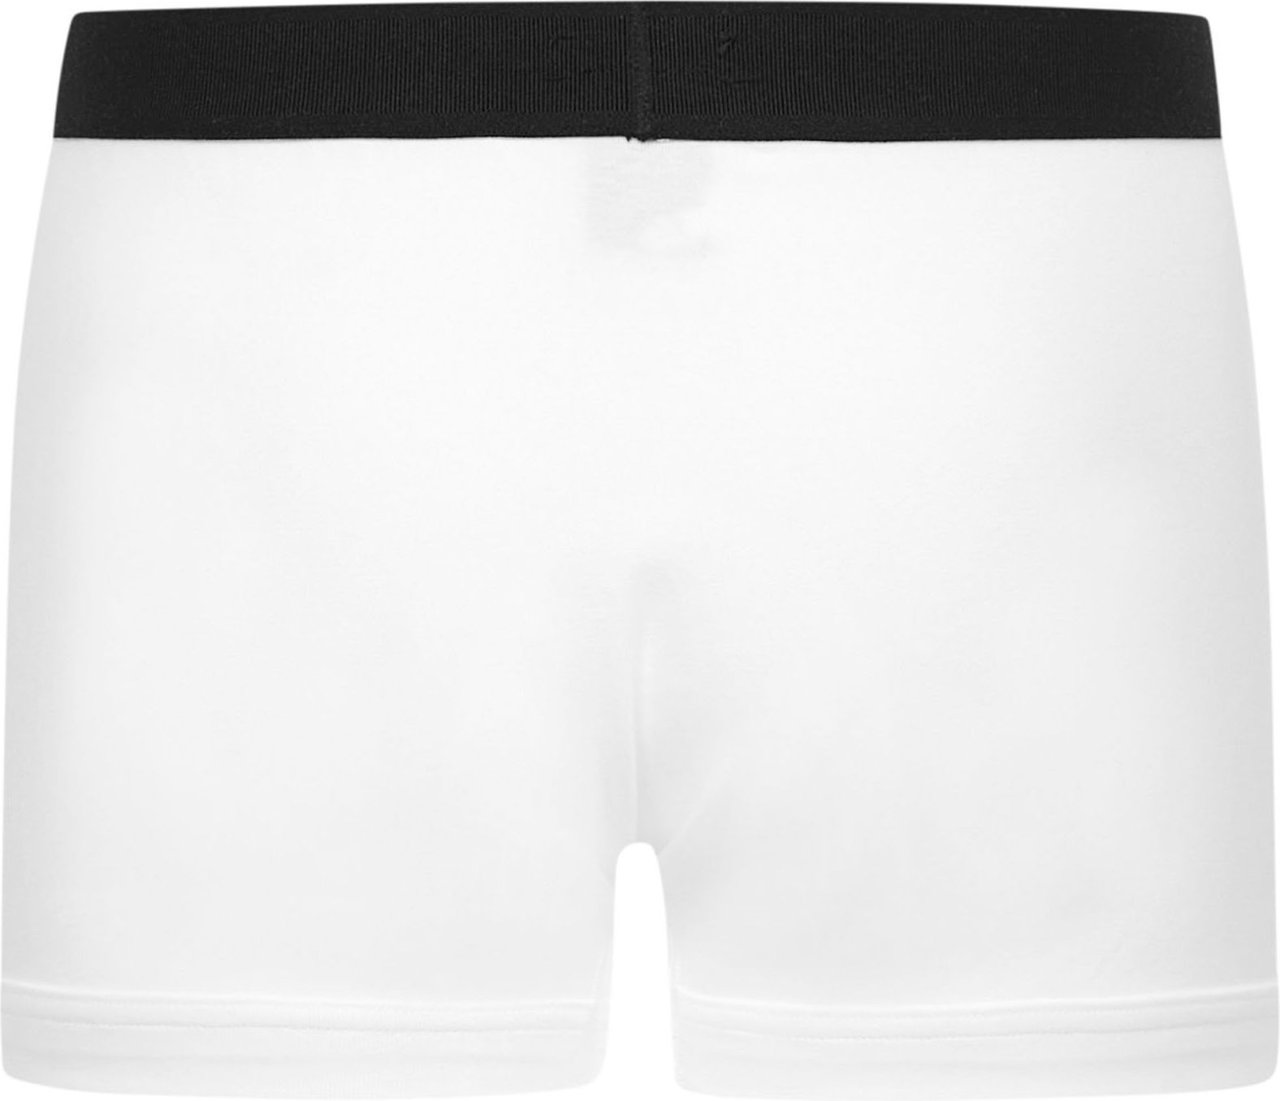 Tom Ford Tom Ford Underwear White Wit